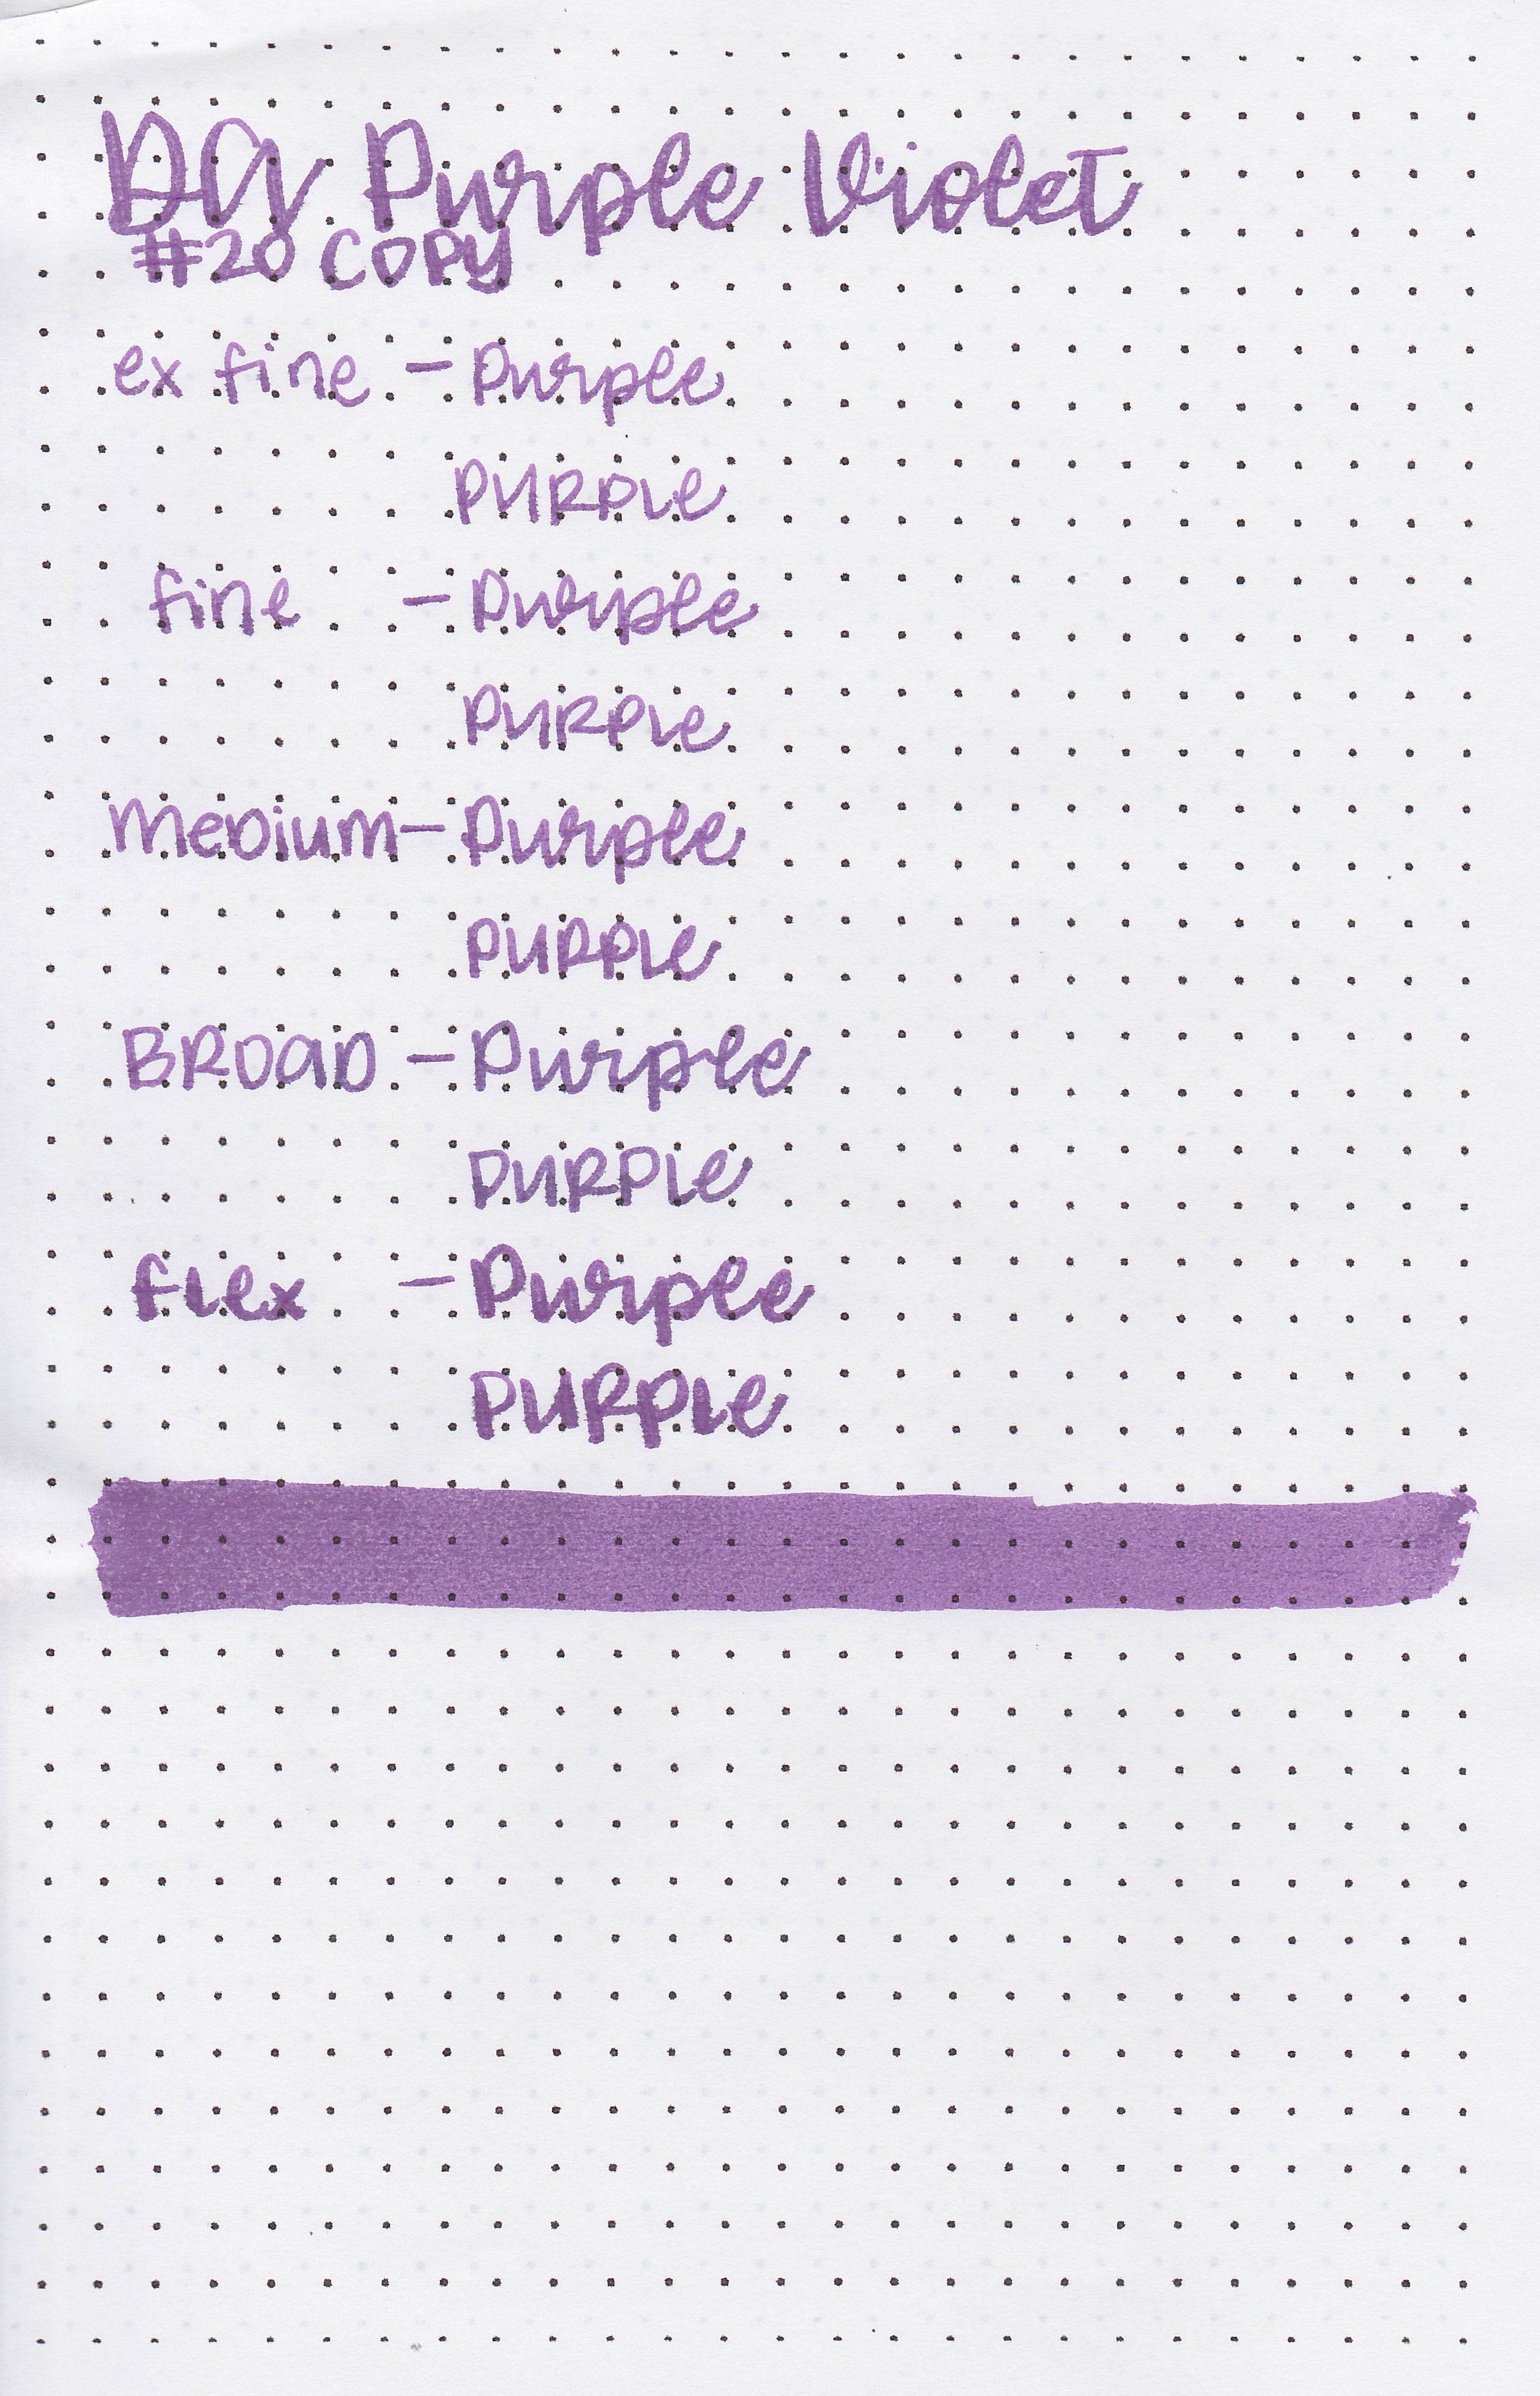 da-purple-violet-11.jpg